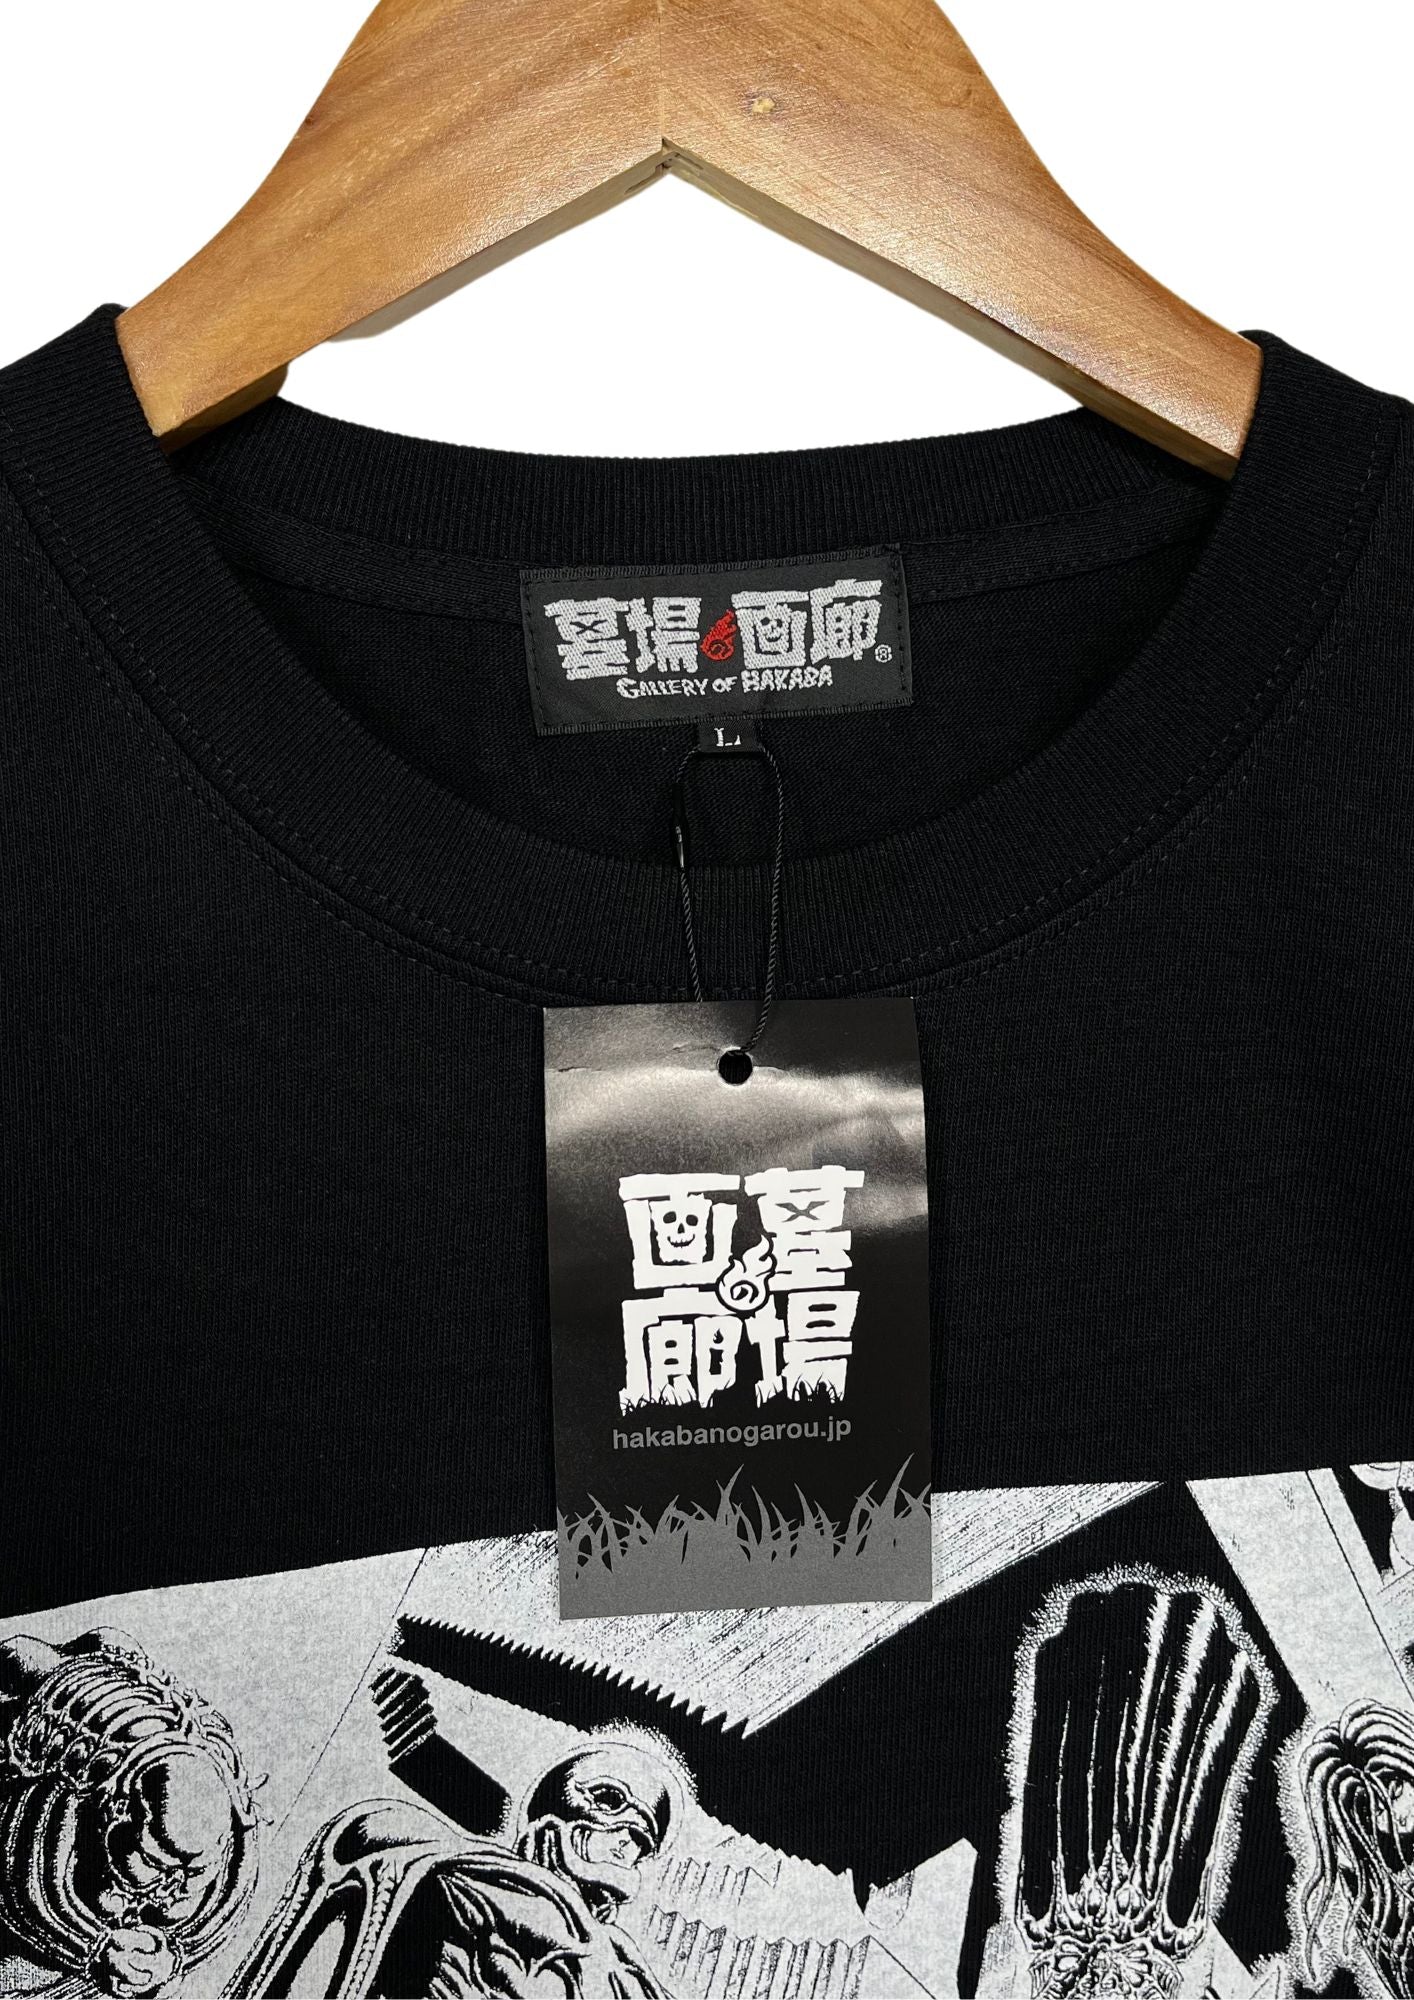 Berserk x Hakabagarou God Hand Exhibition Limited T-shirt